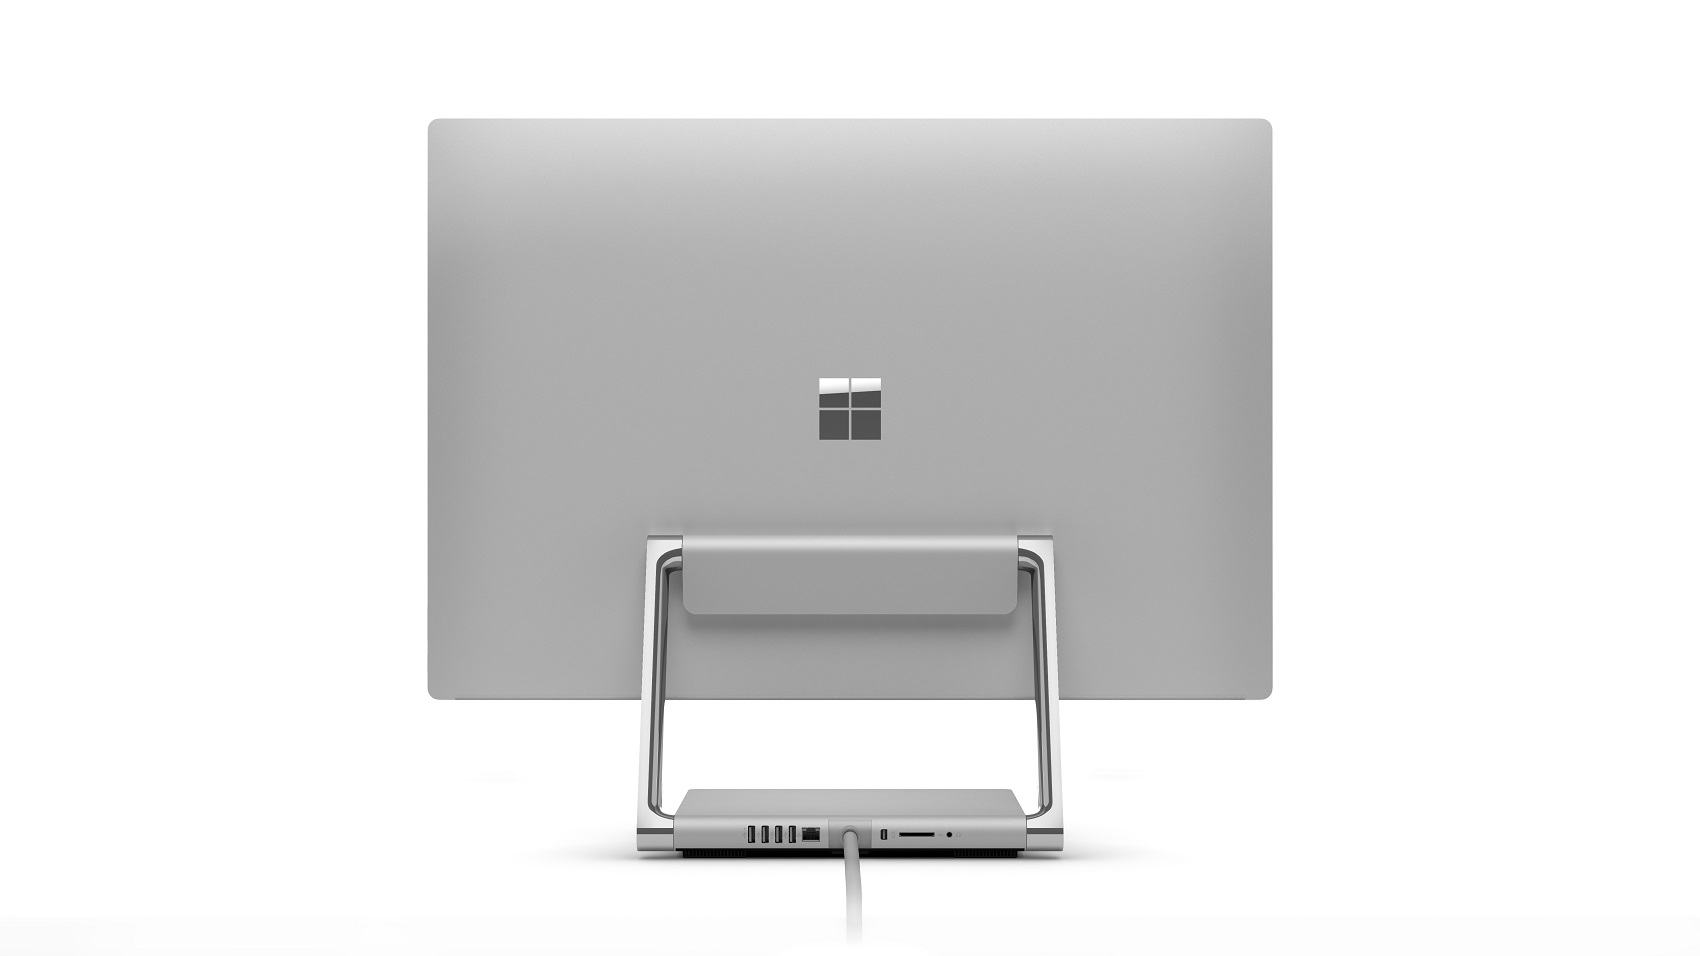 Surface Studio with Zero Gravity Hinge